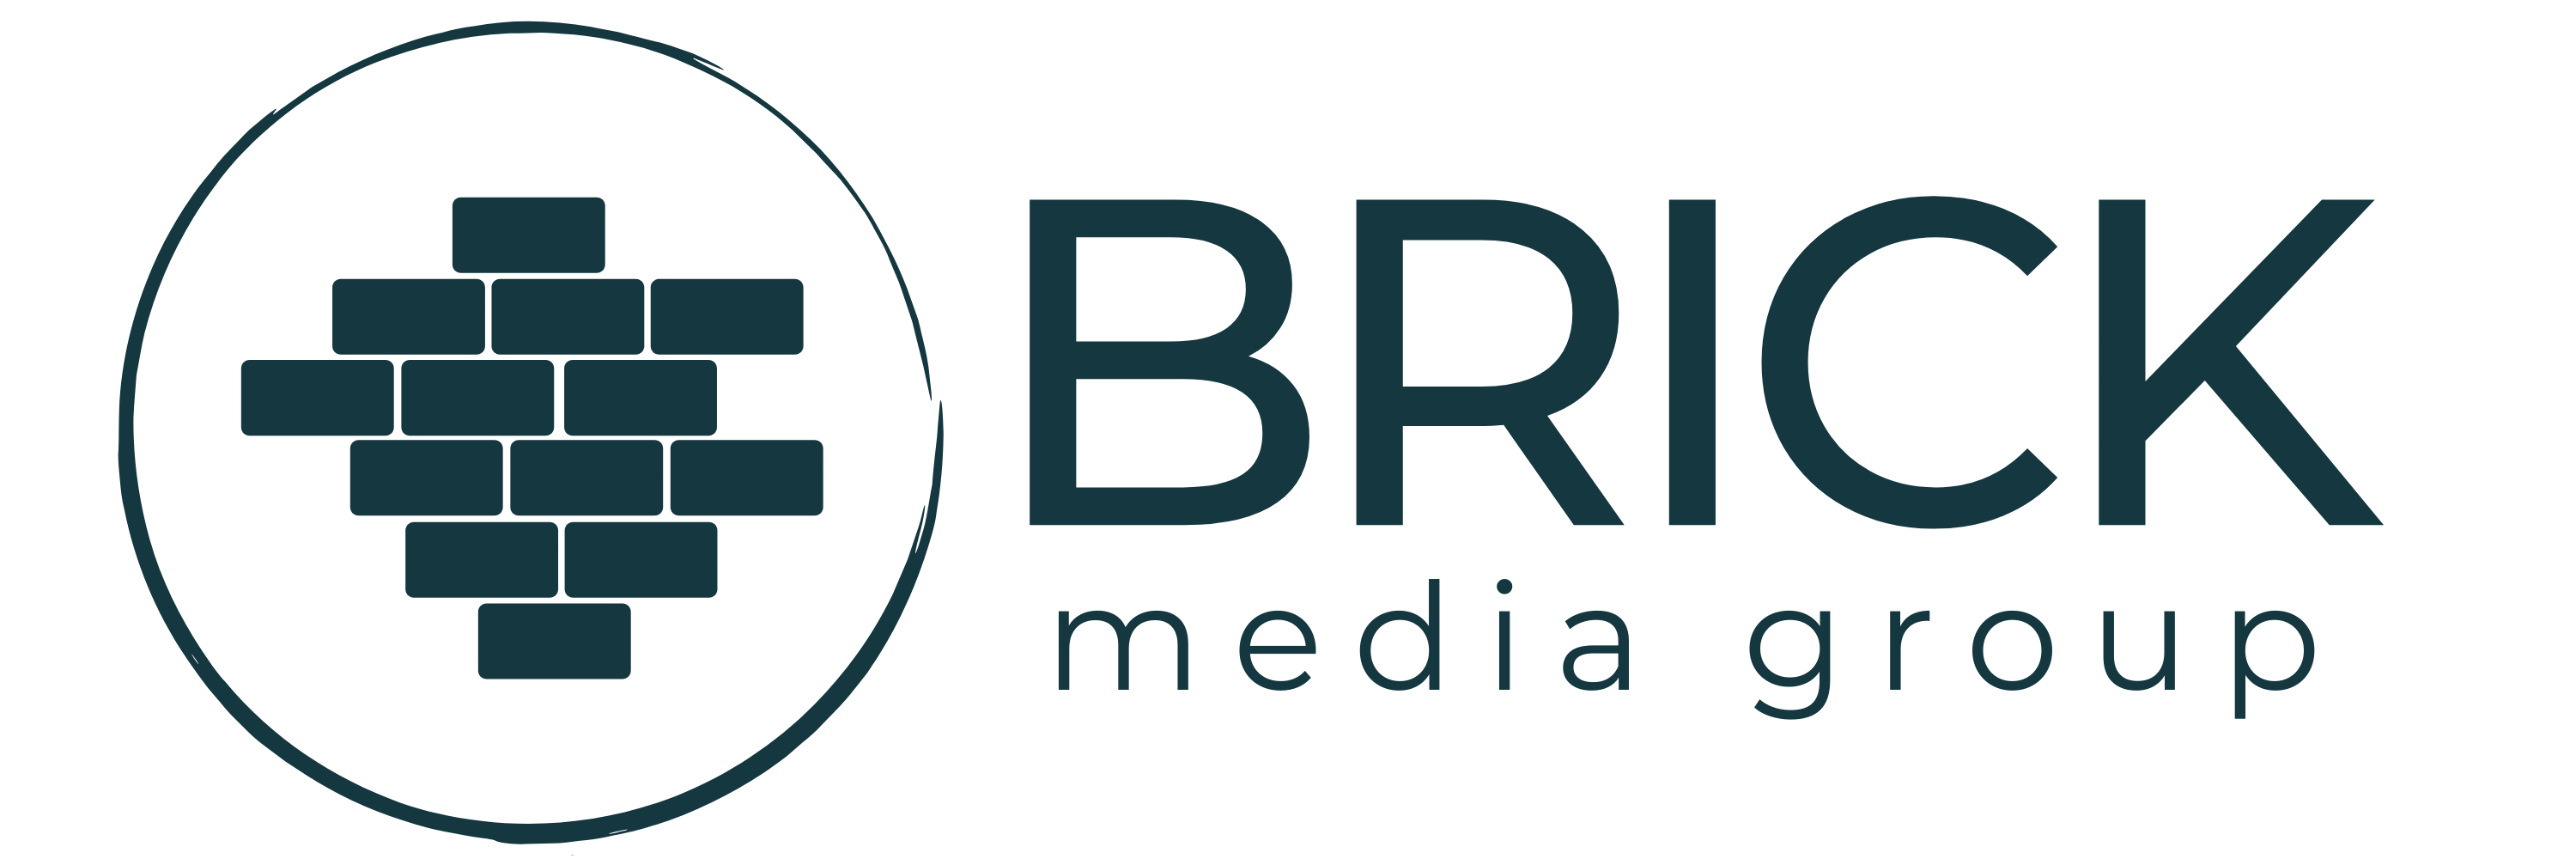 Brick Media Group